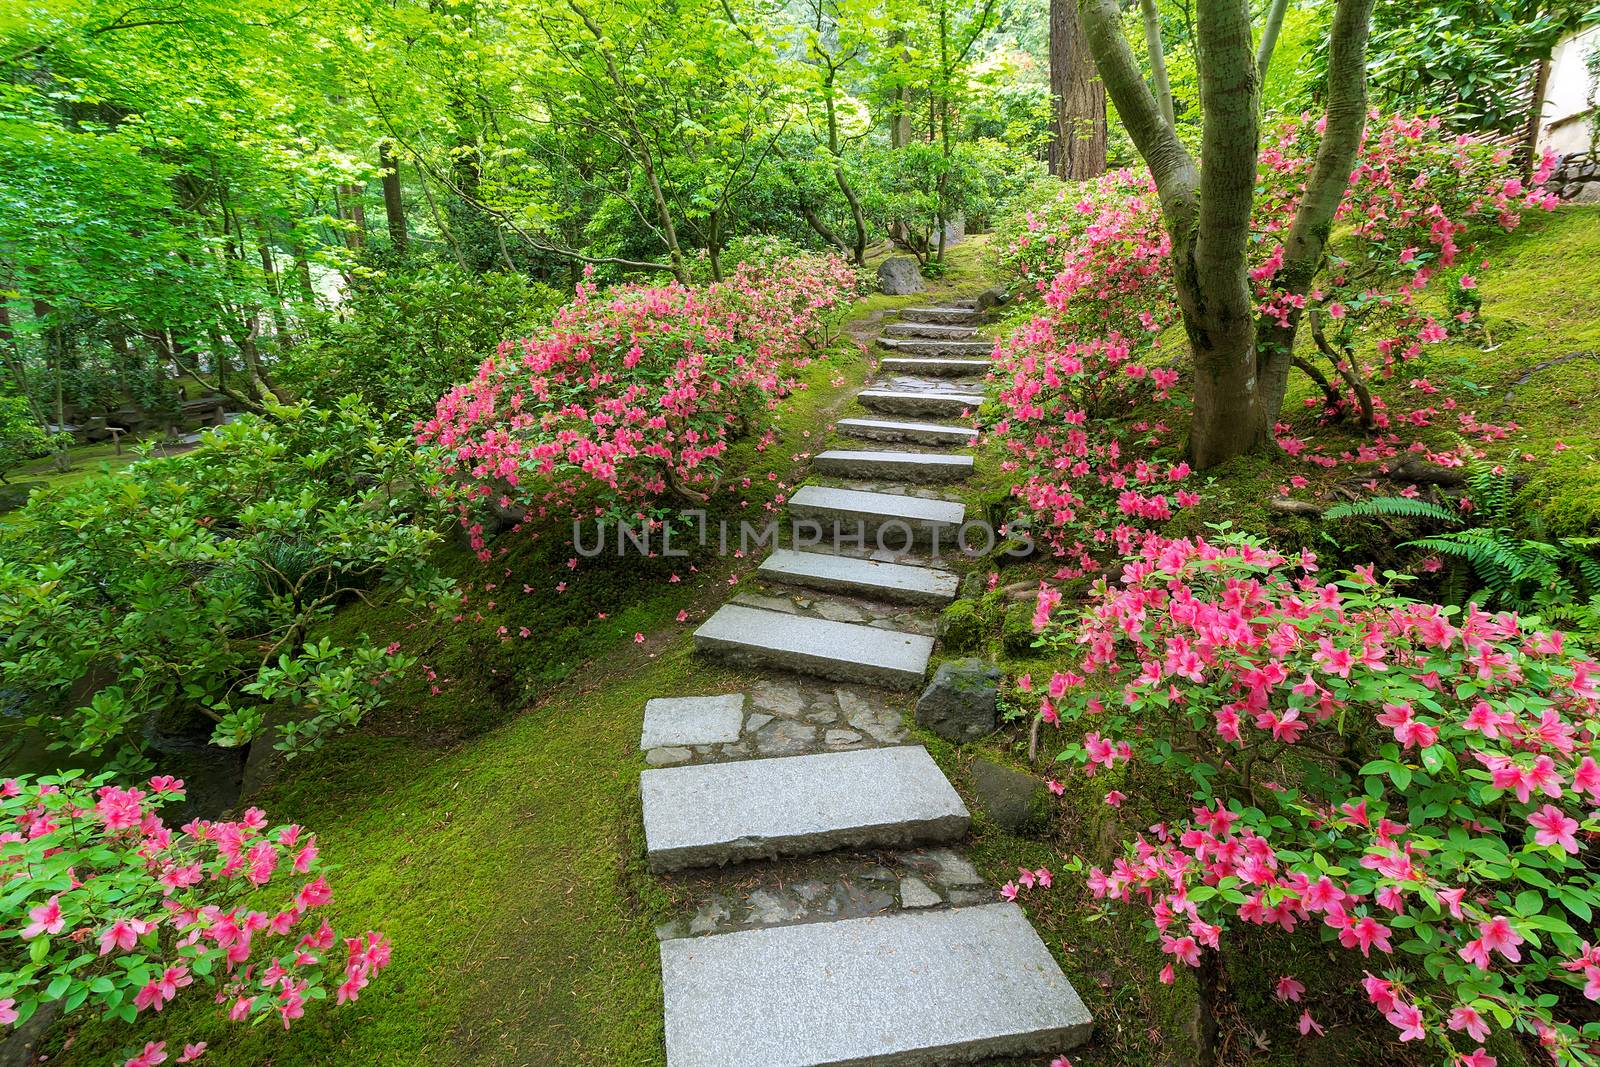 Azaleas in Bloom along Japanese Stone Stairs by jpldesigns